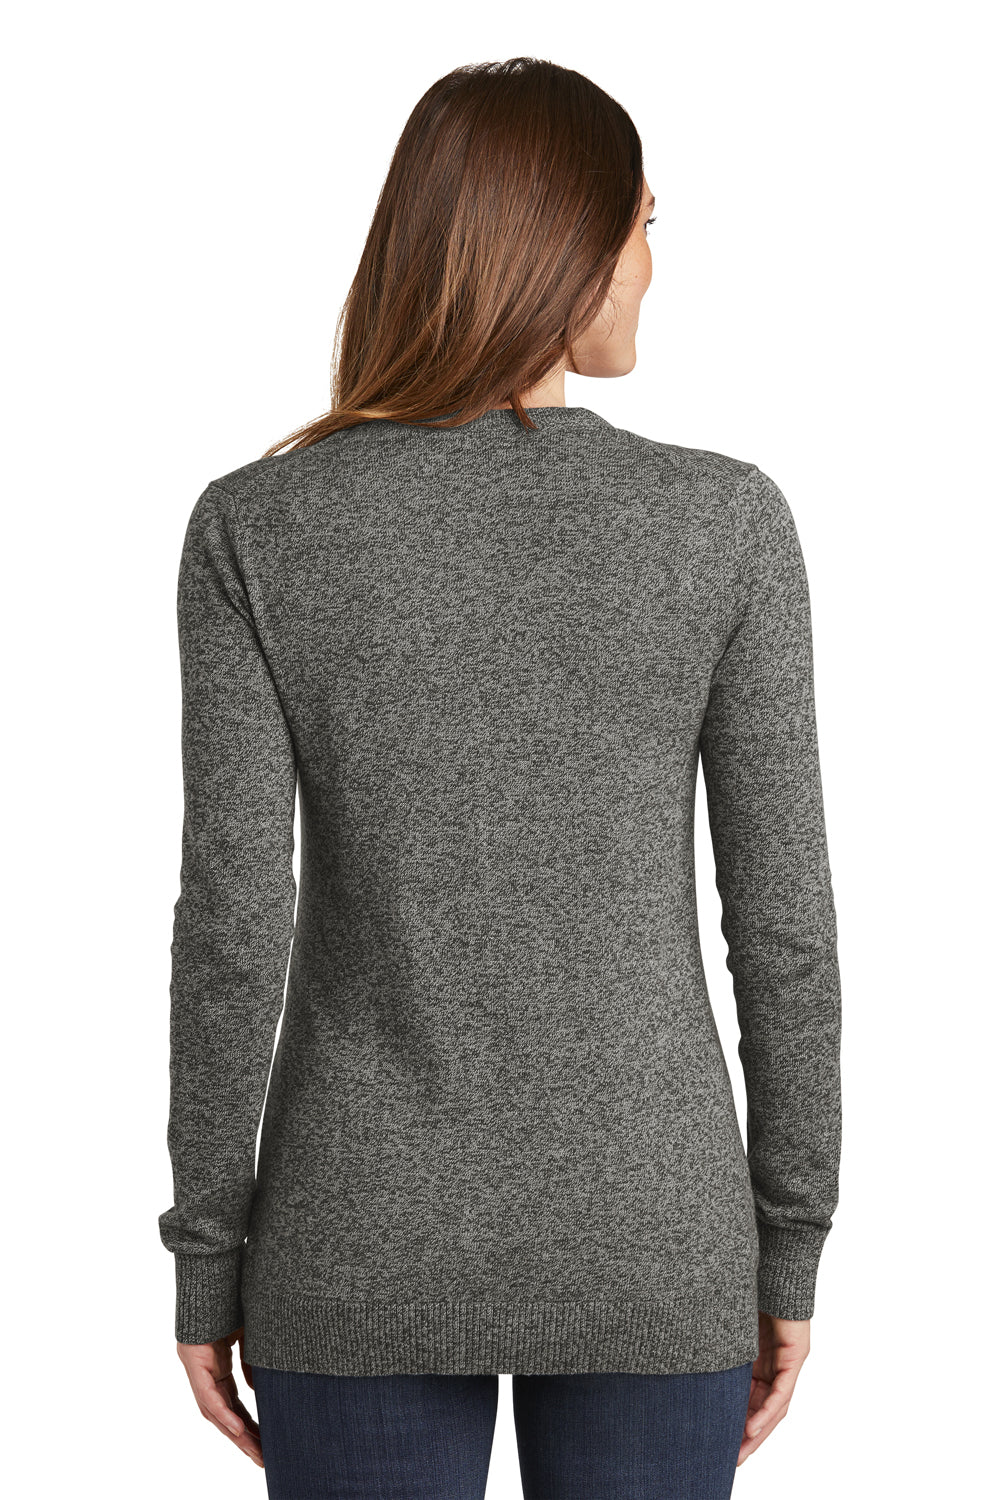 Port Authority LSW415 Womens Long Sleeve Cardigan Sweater Grey Back